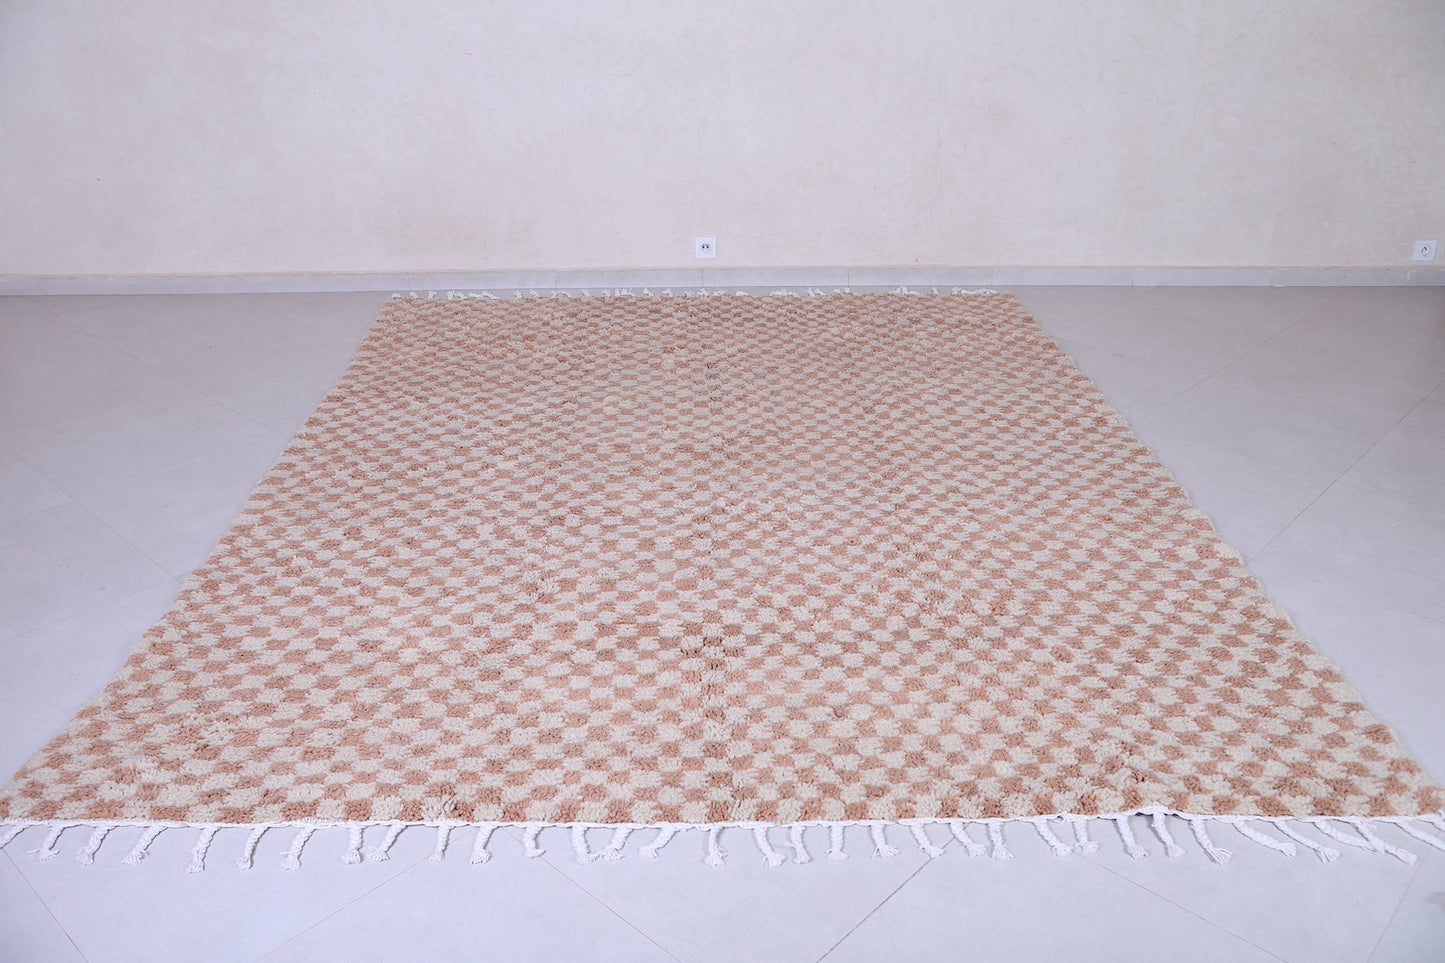 Custom Moroccan checkered carpet - Handmade Moroccan Berber rug